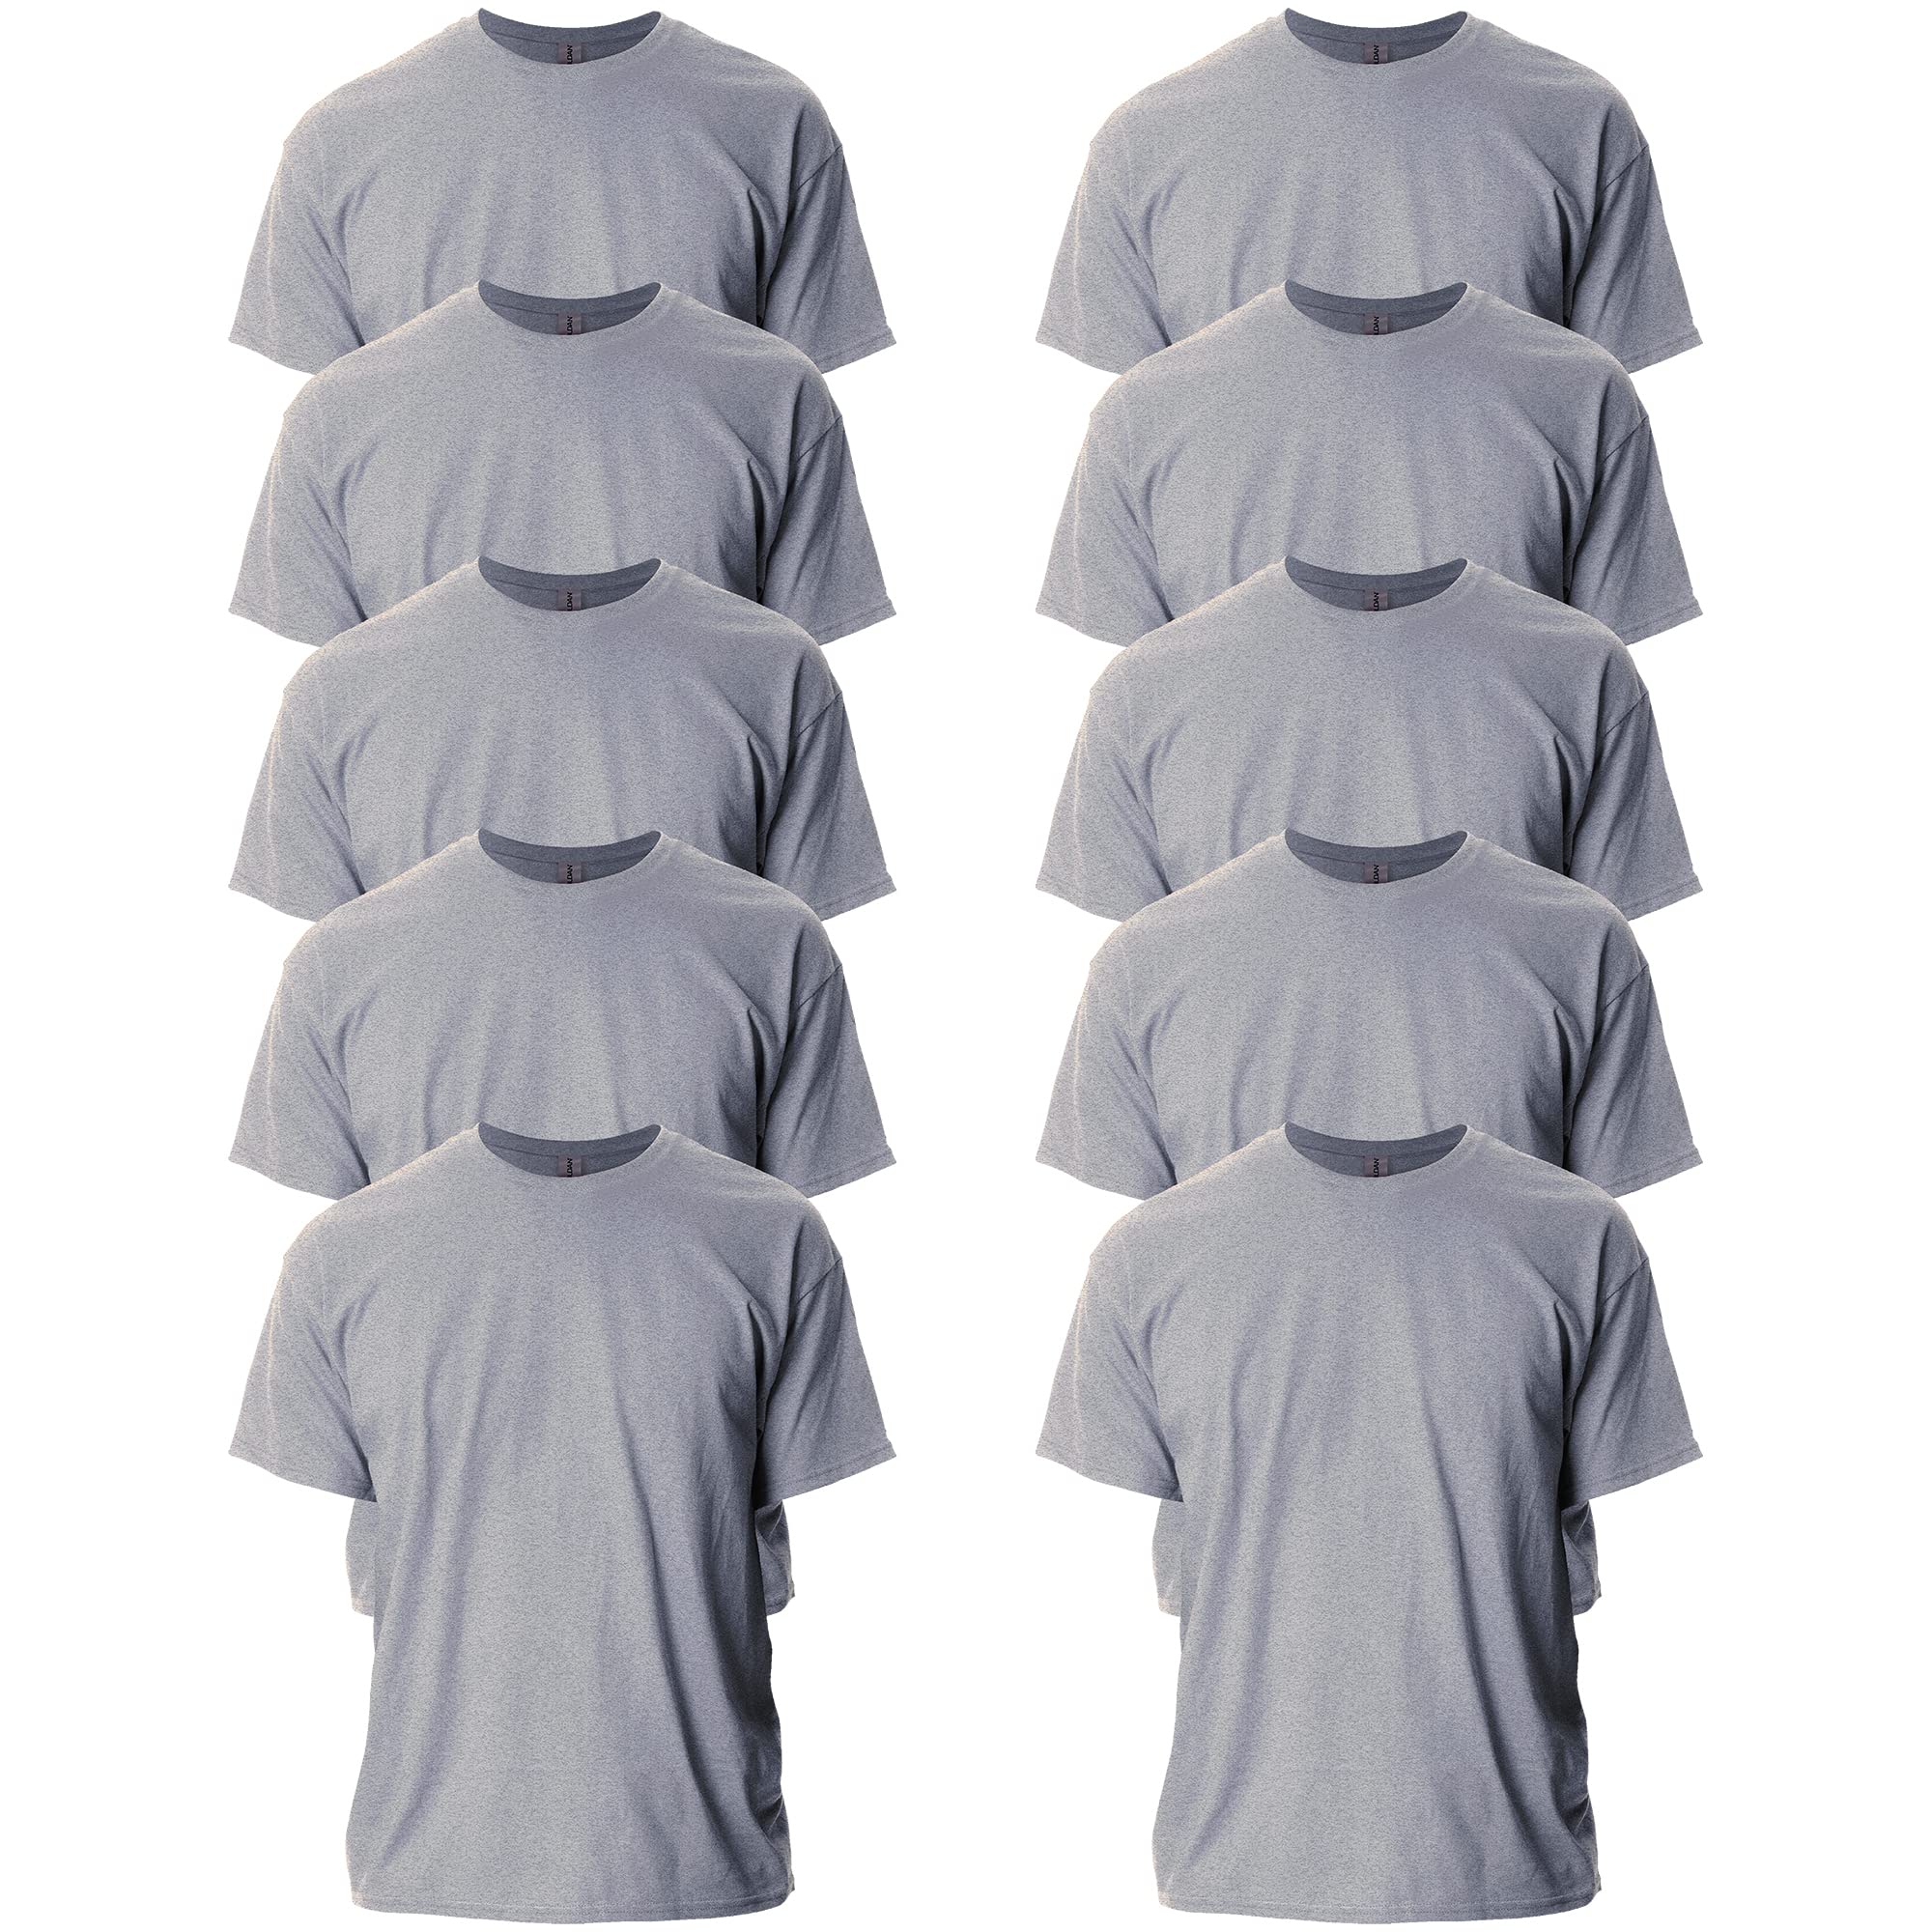 Gildan 10 pack cotton shirts (Gray) $11.49